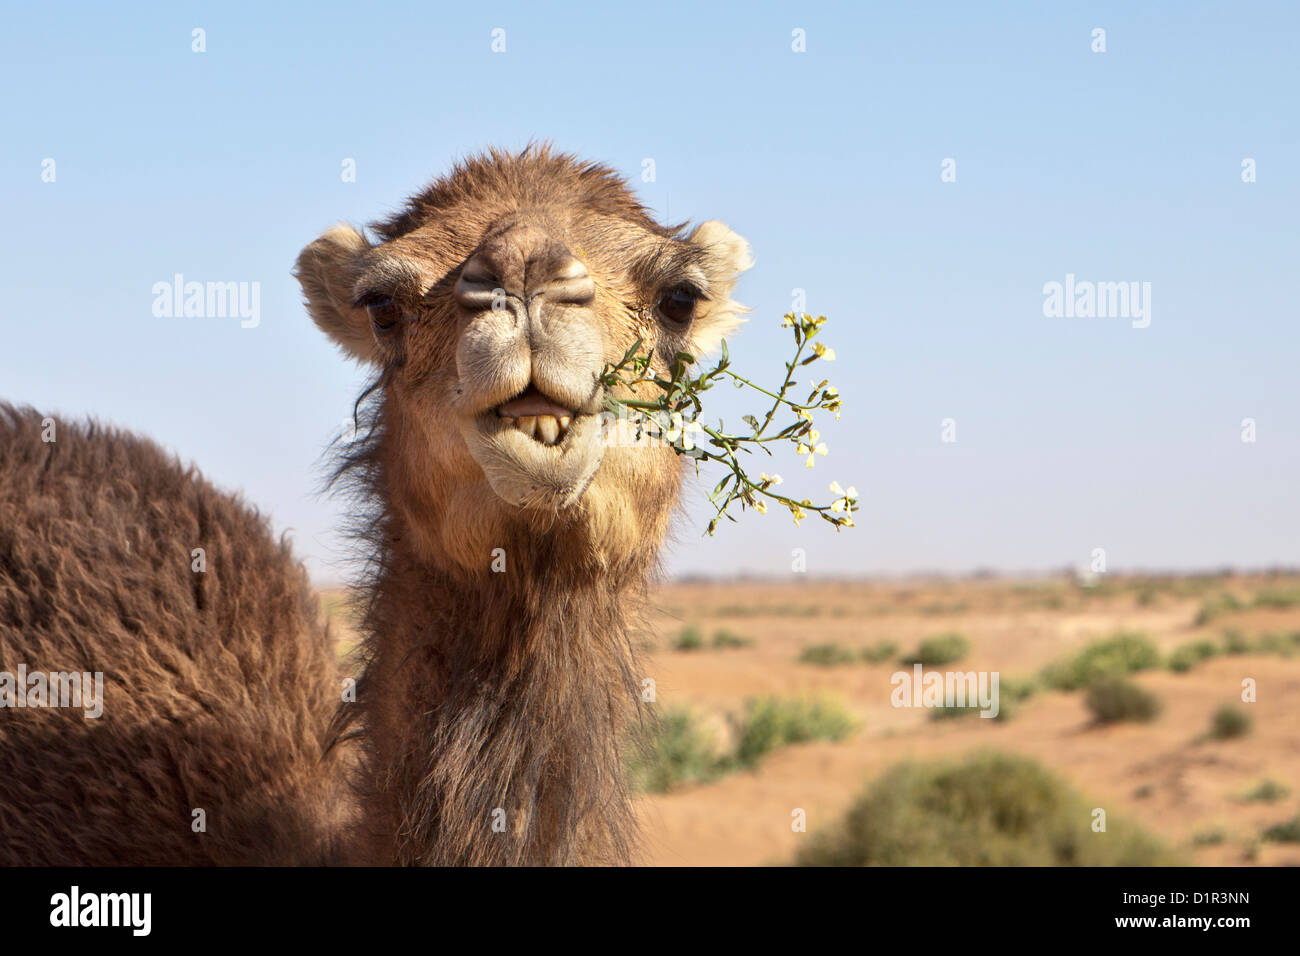 Morocco, M'Hamid, Erg Chigaga. Sahara desert. Camel eating flowering bush. Stock Photo